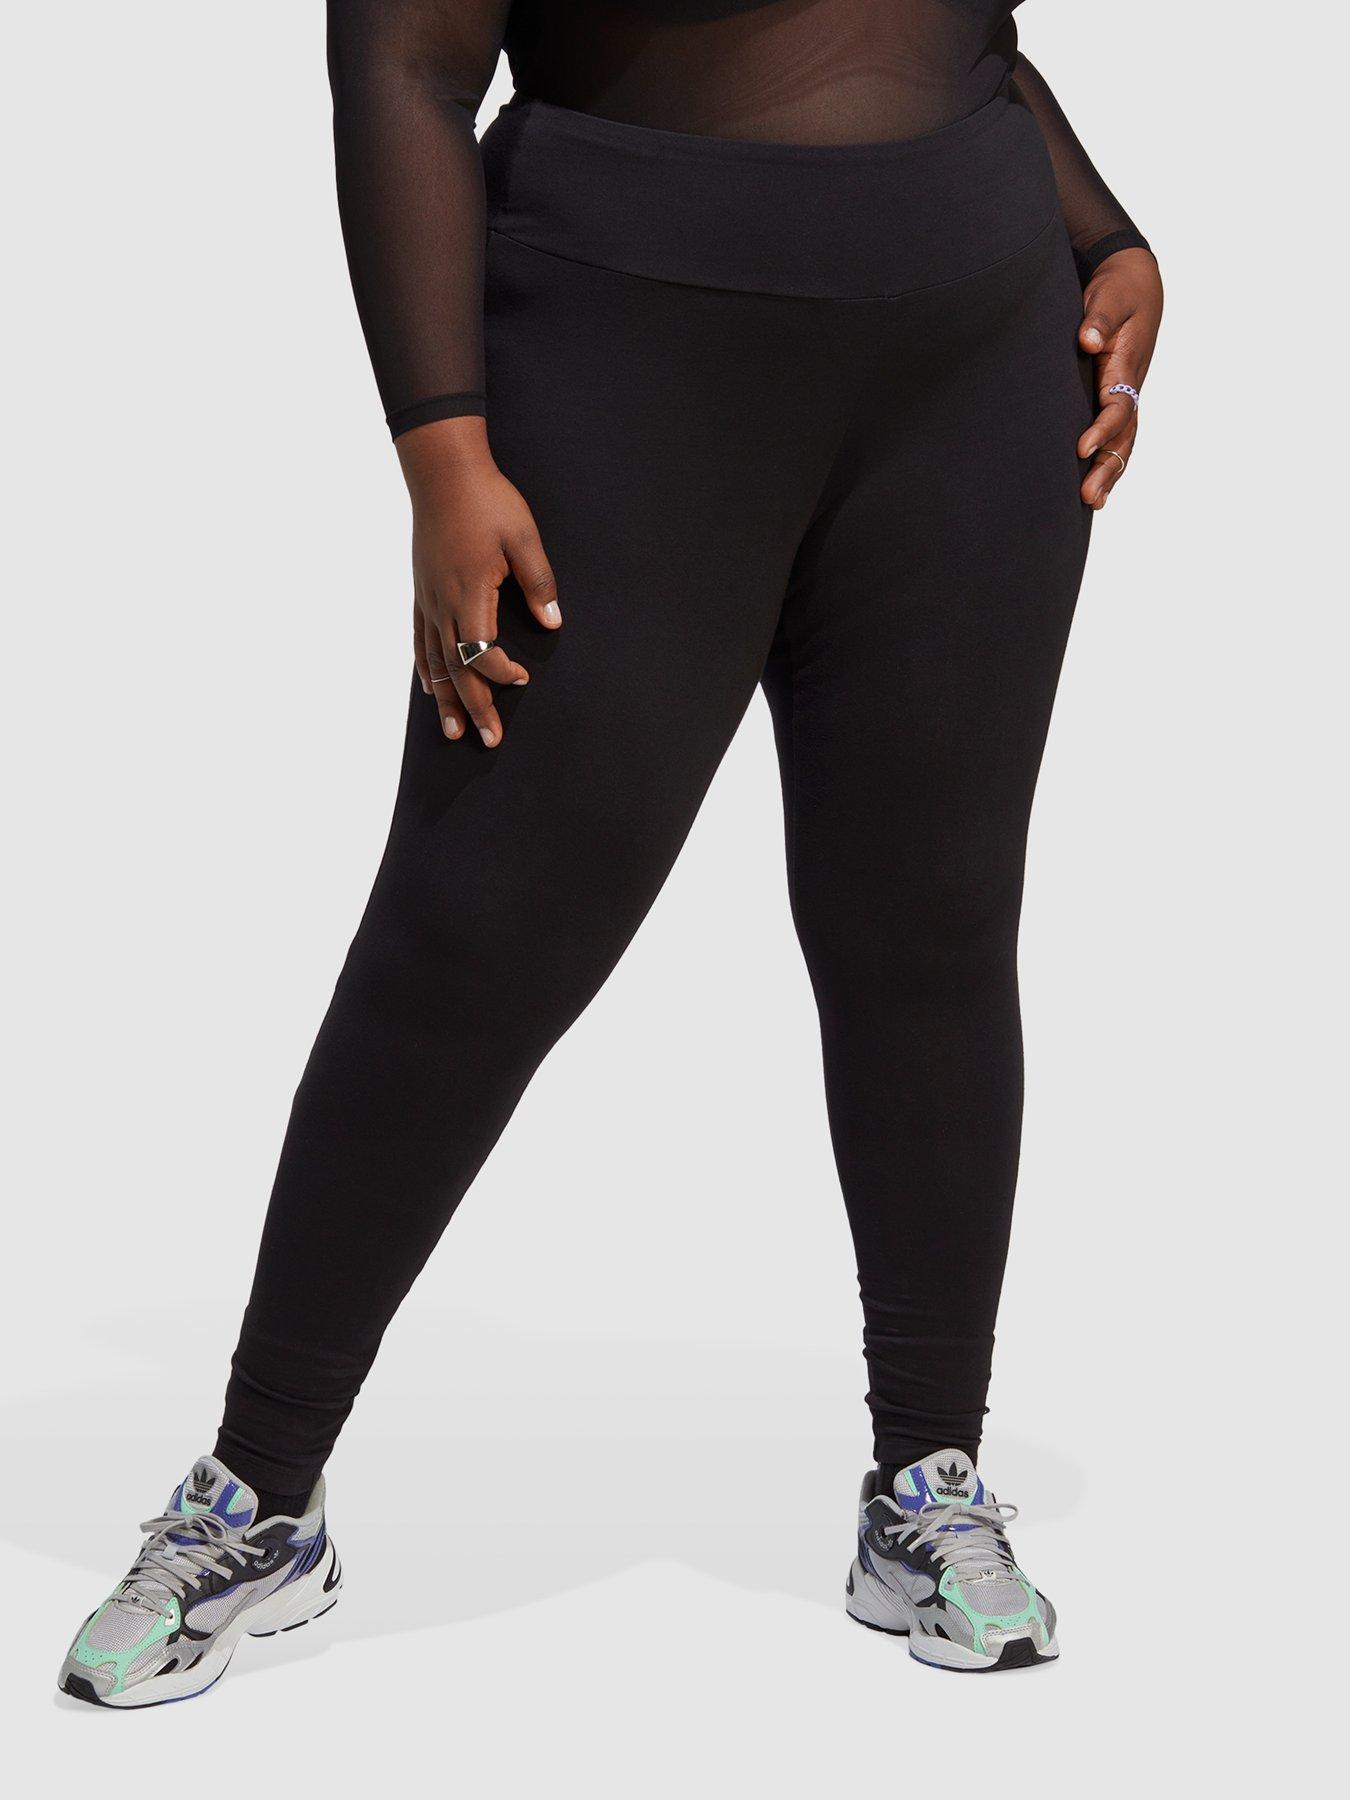 adidas Trefoil Tights - Black, Women's Lifestyle